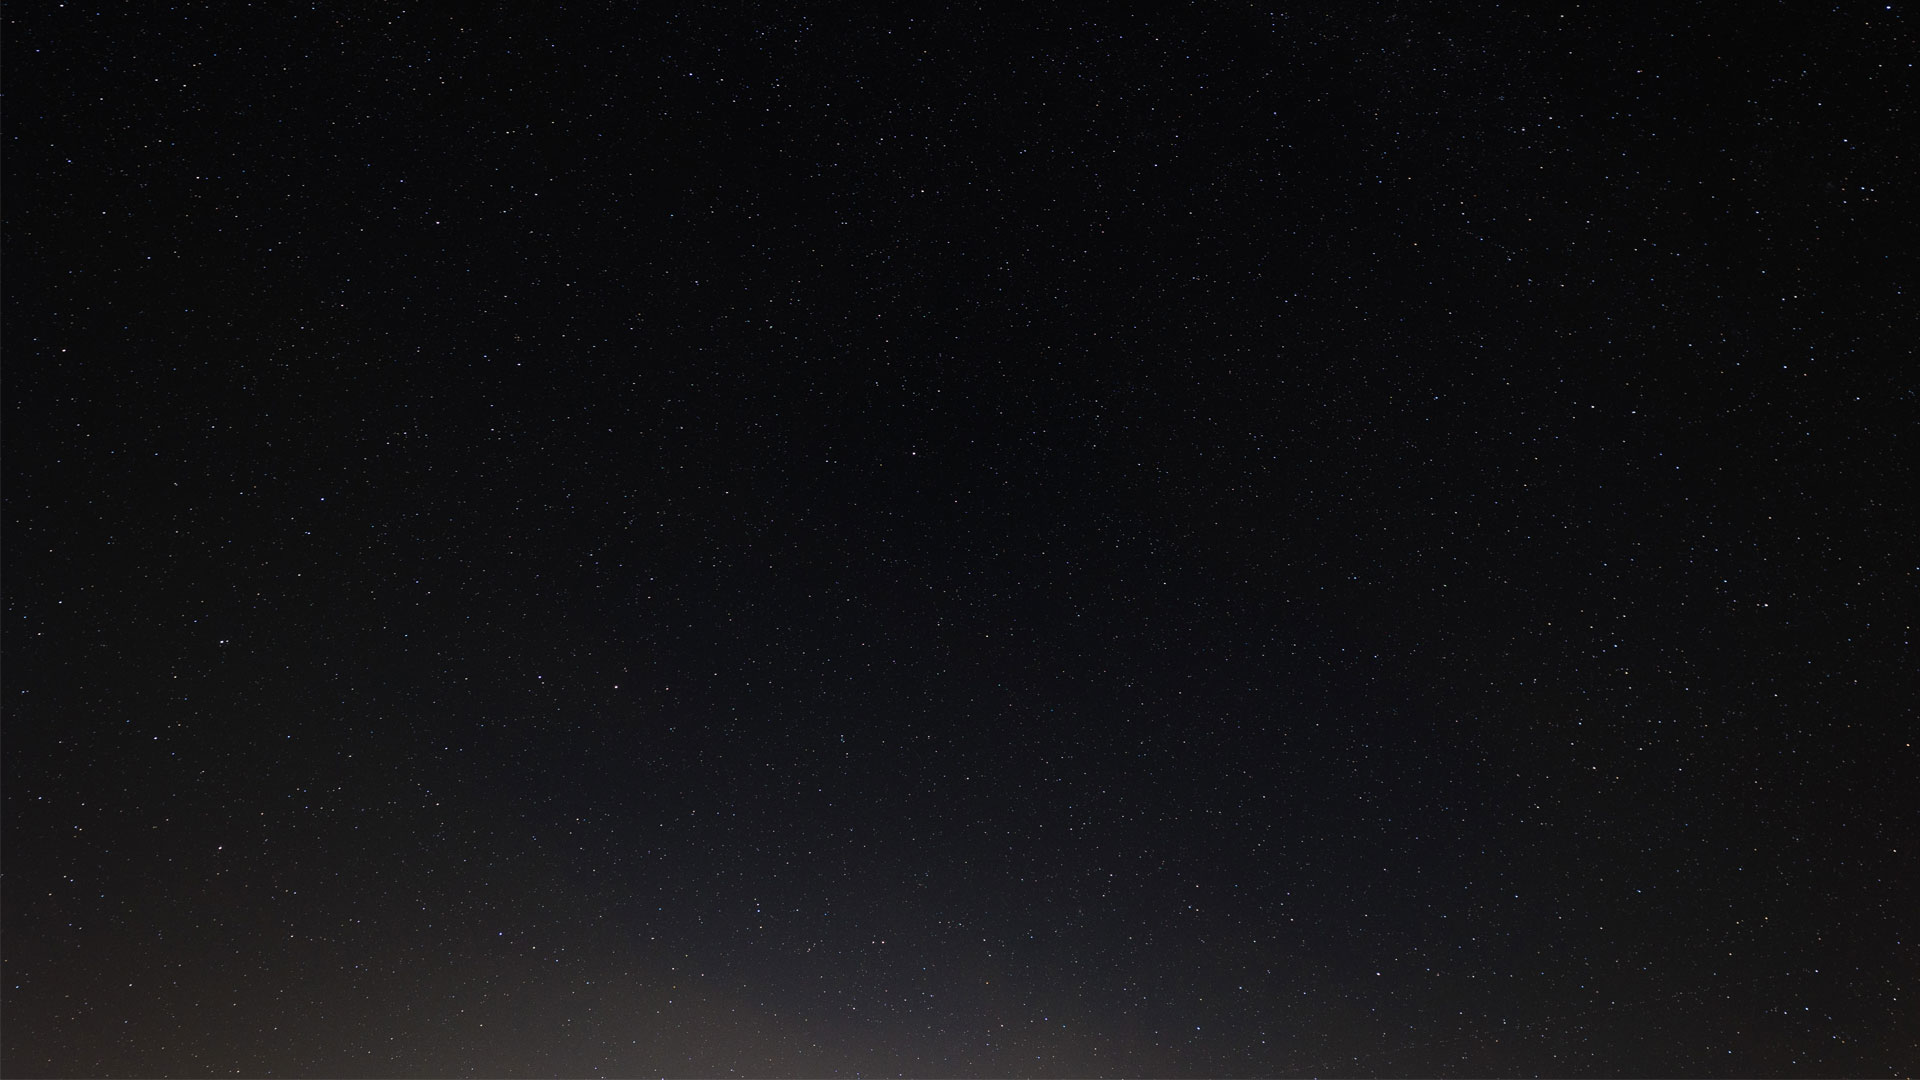 Sigma 14-24mm F2.8 DG HSM ART lens review: image shows Night sky